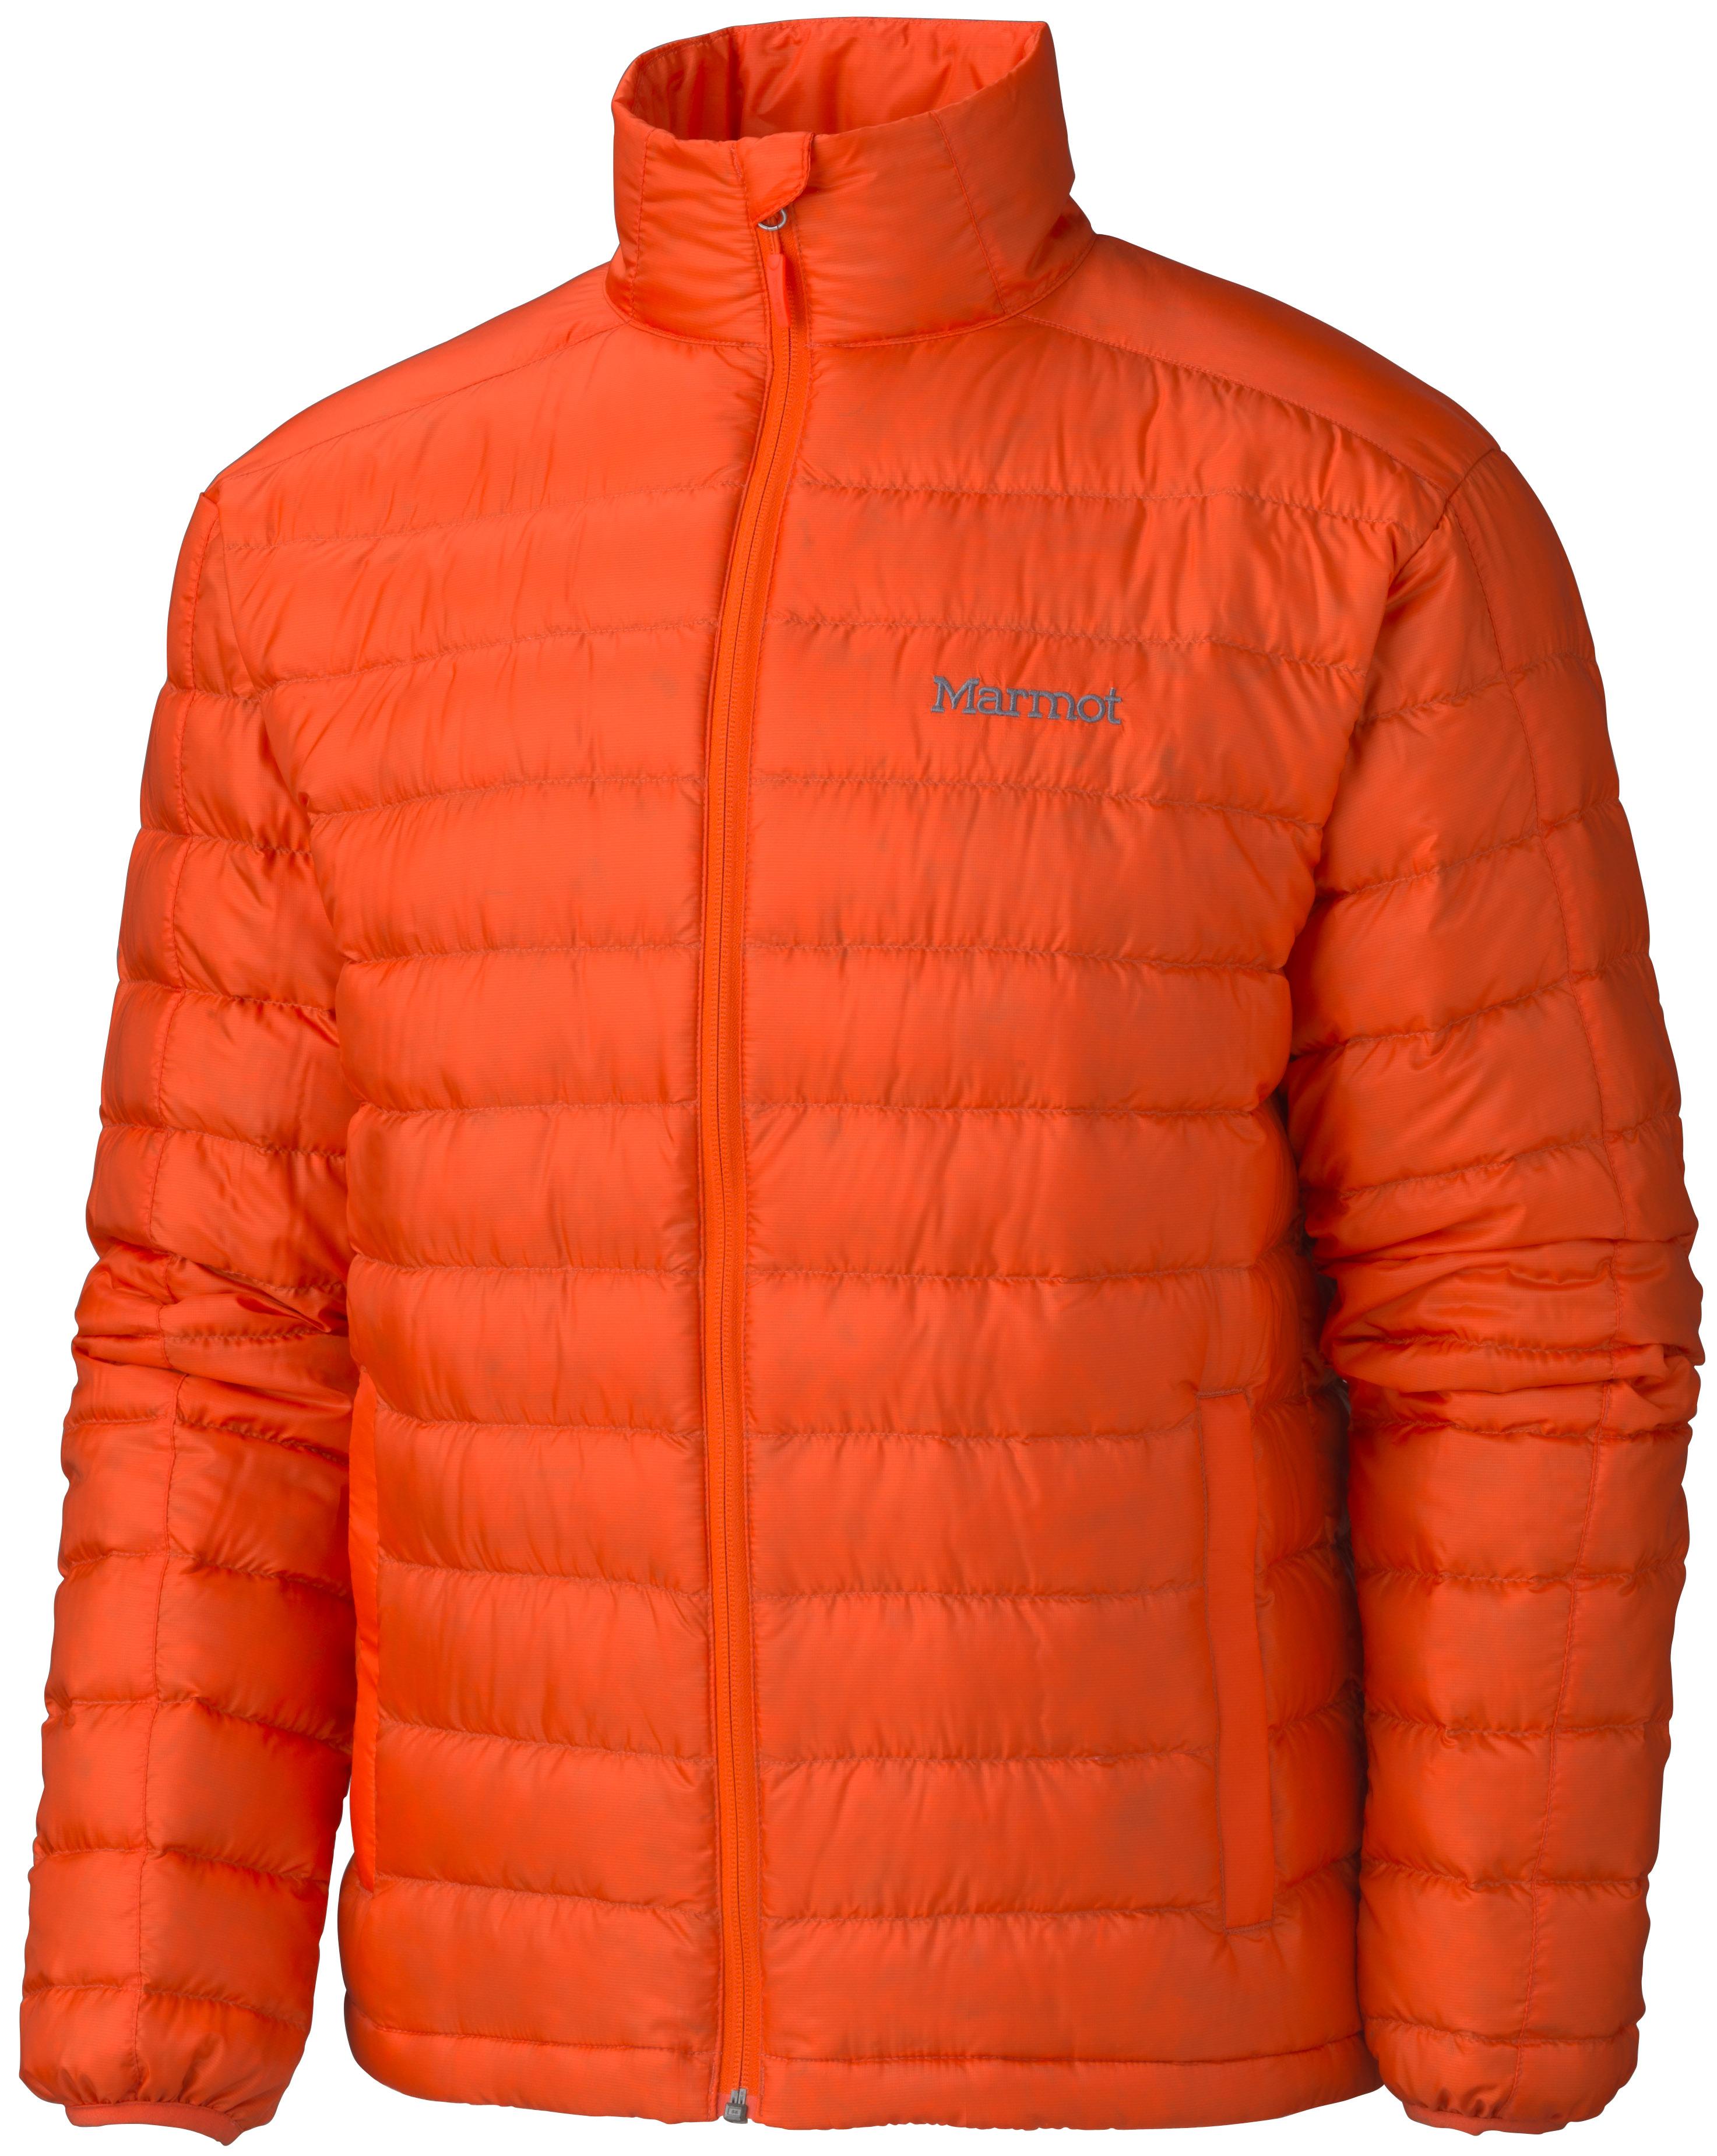 Foto Marmot Zeus Jacket Men Sunset Orange (Modell 2013/14)